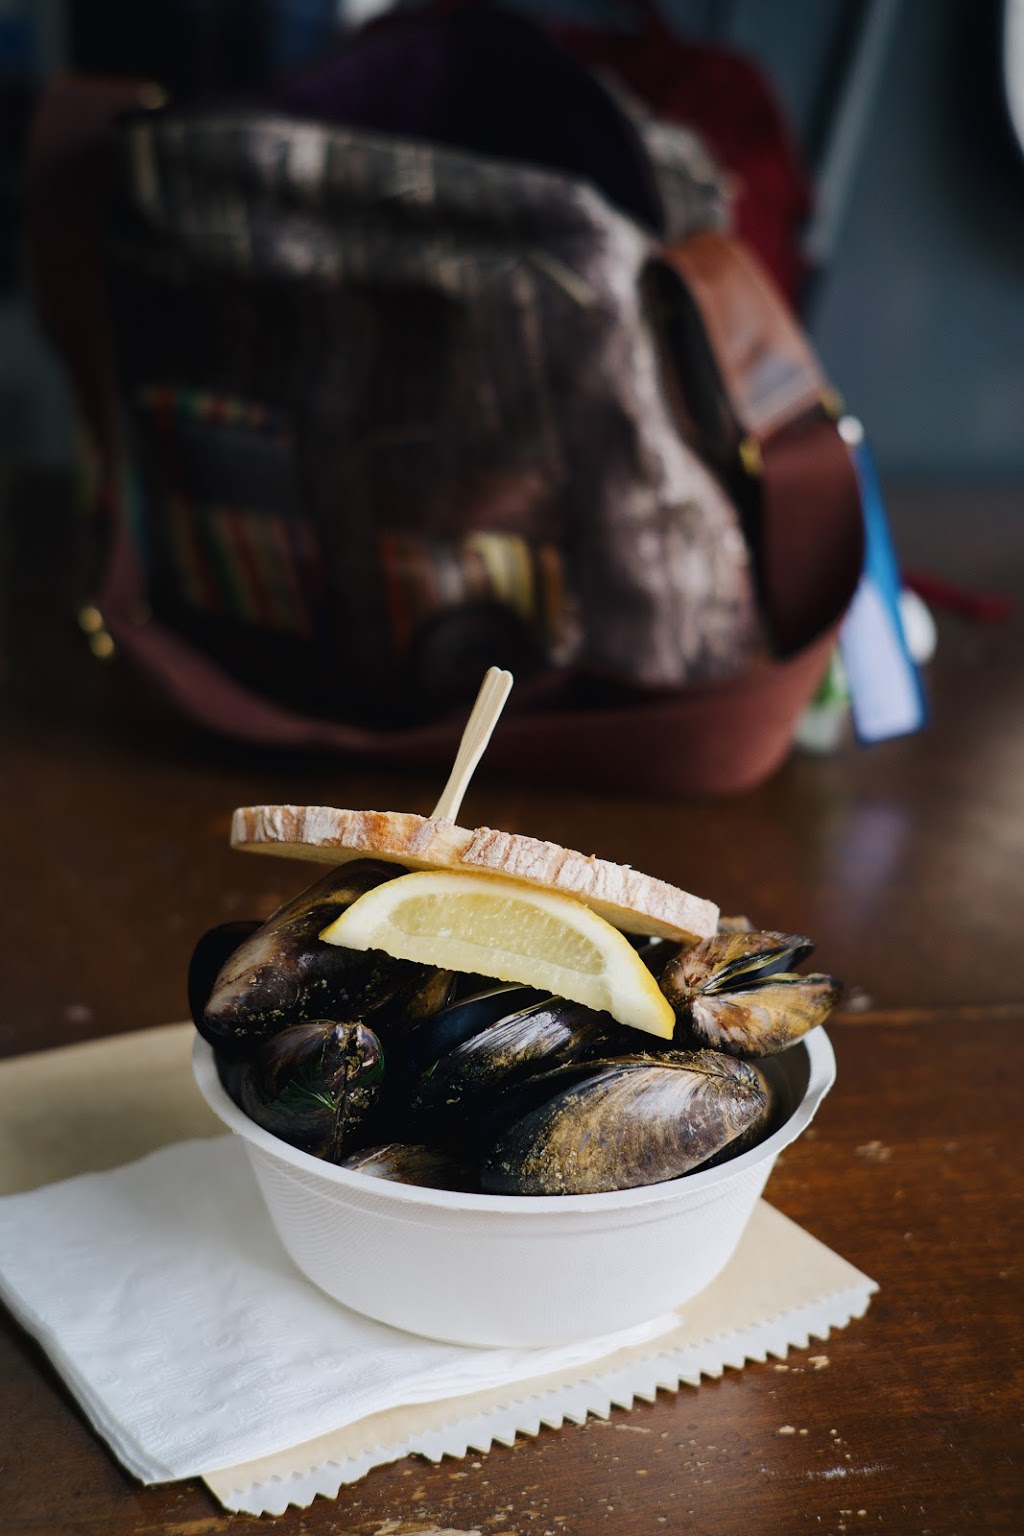 The Mussels Pot | restaurant | Australia, Victoria, Melbourne, AU : 墨爾本市中心 澳洲維多利亞省墨爾本邮政编码邮政编码: 3000